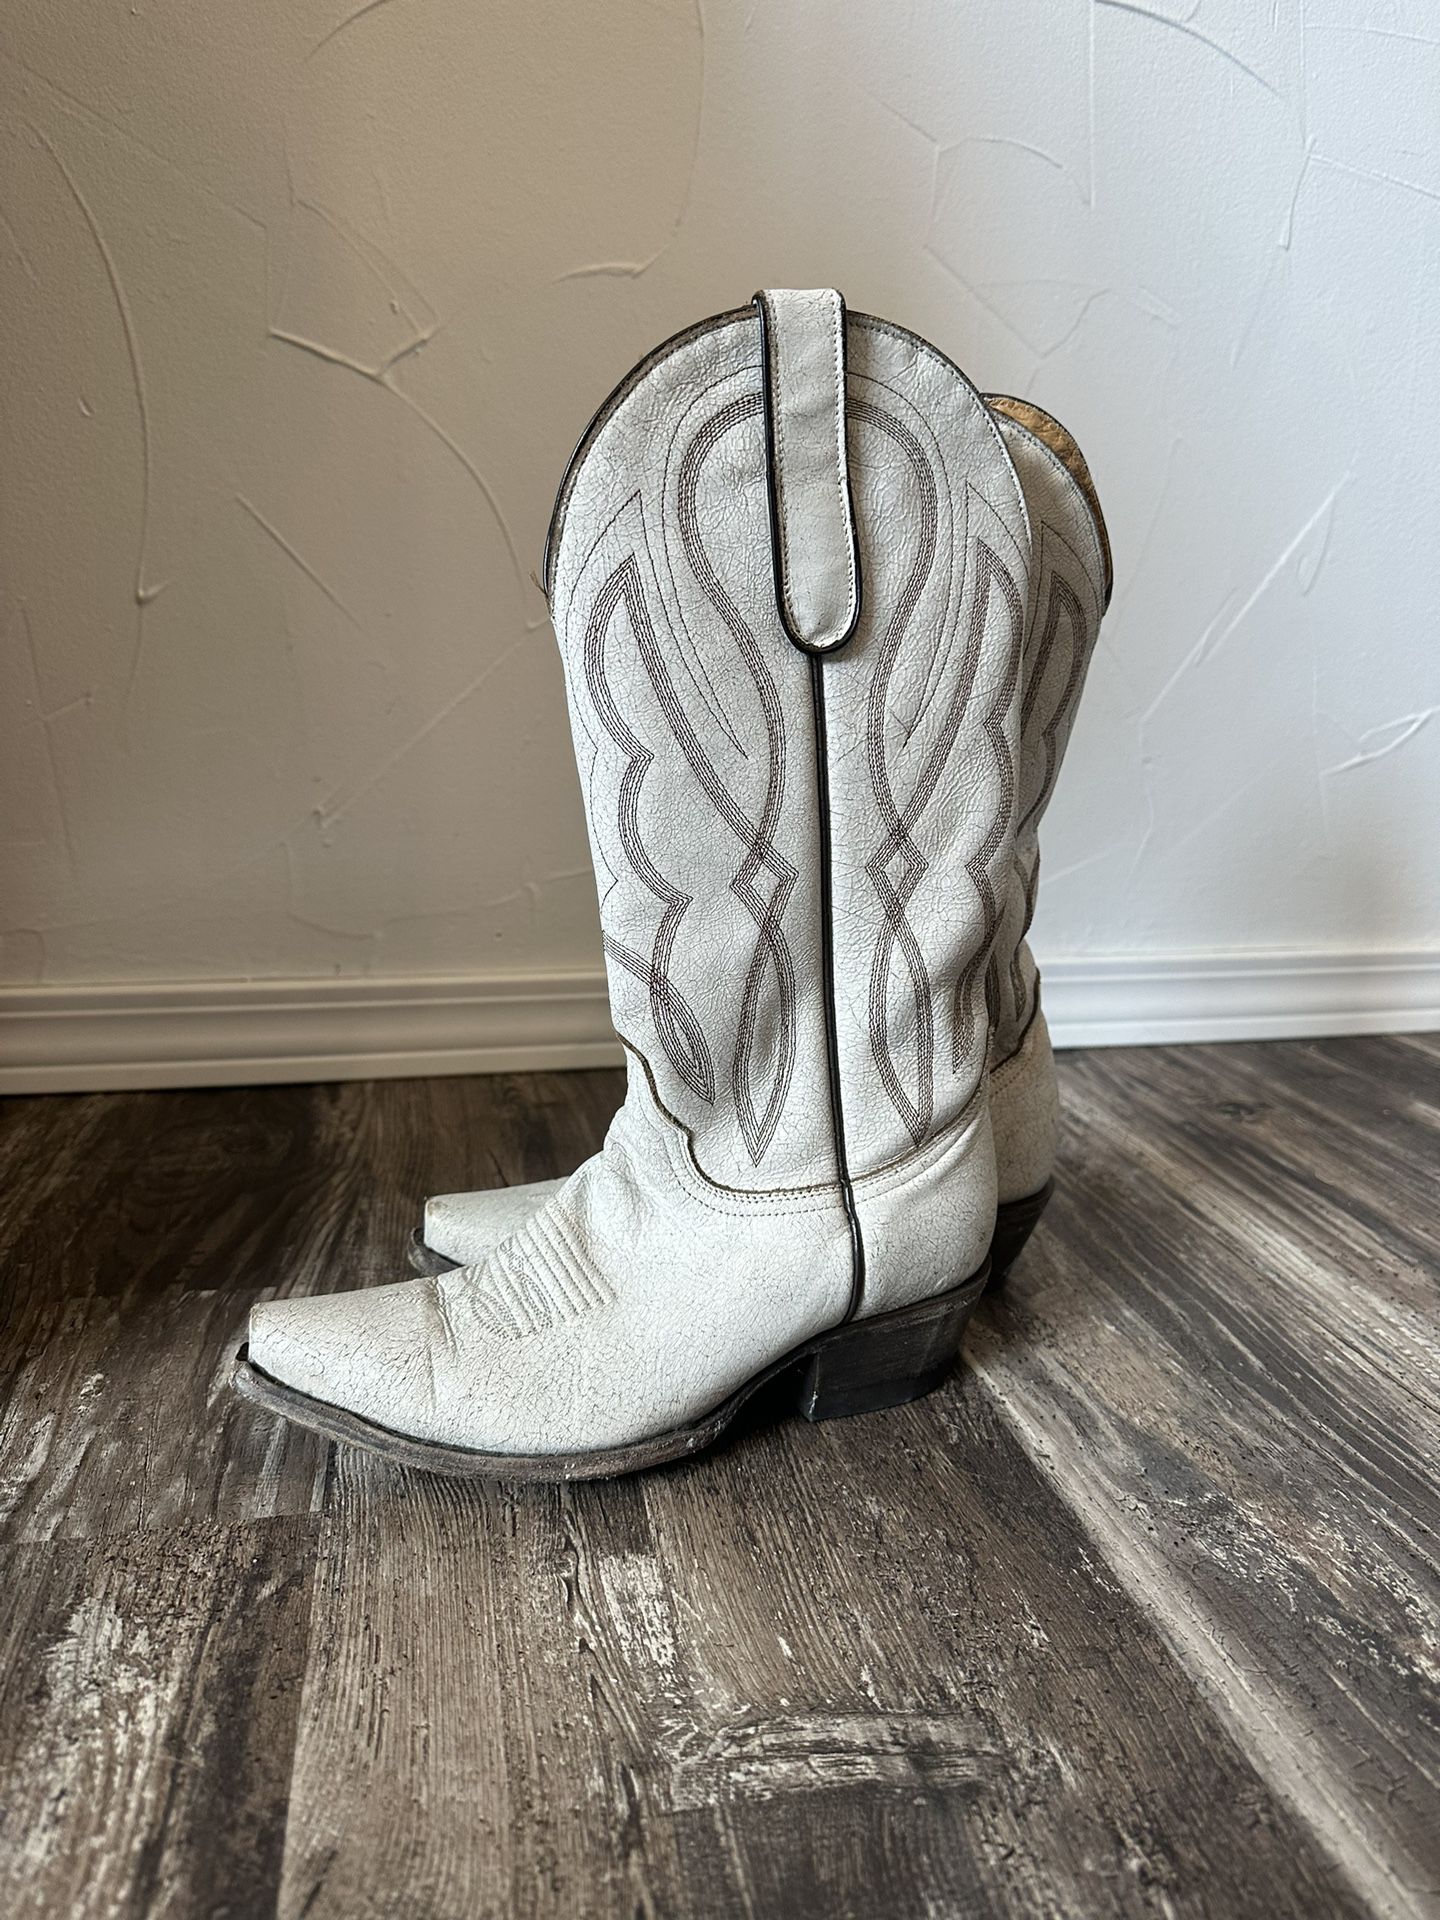 Idyllwind Woman’s Colt Western Boots (Snip Toe)